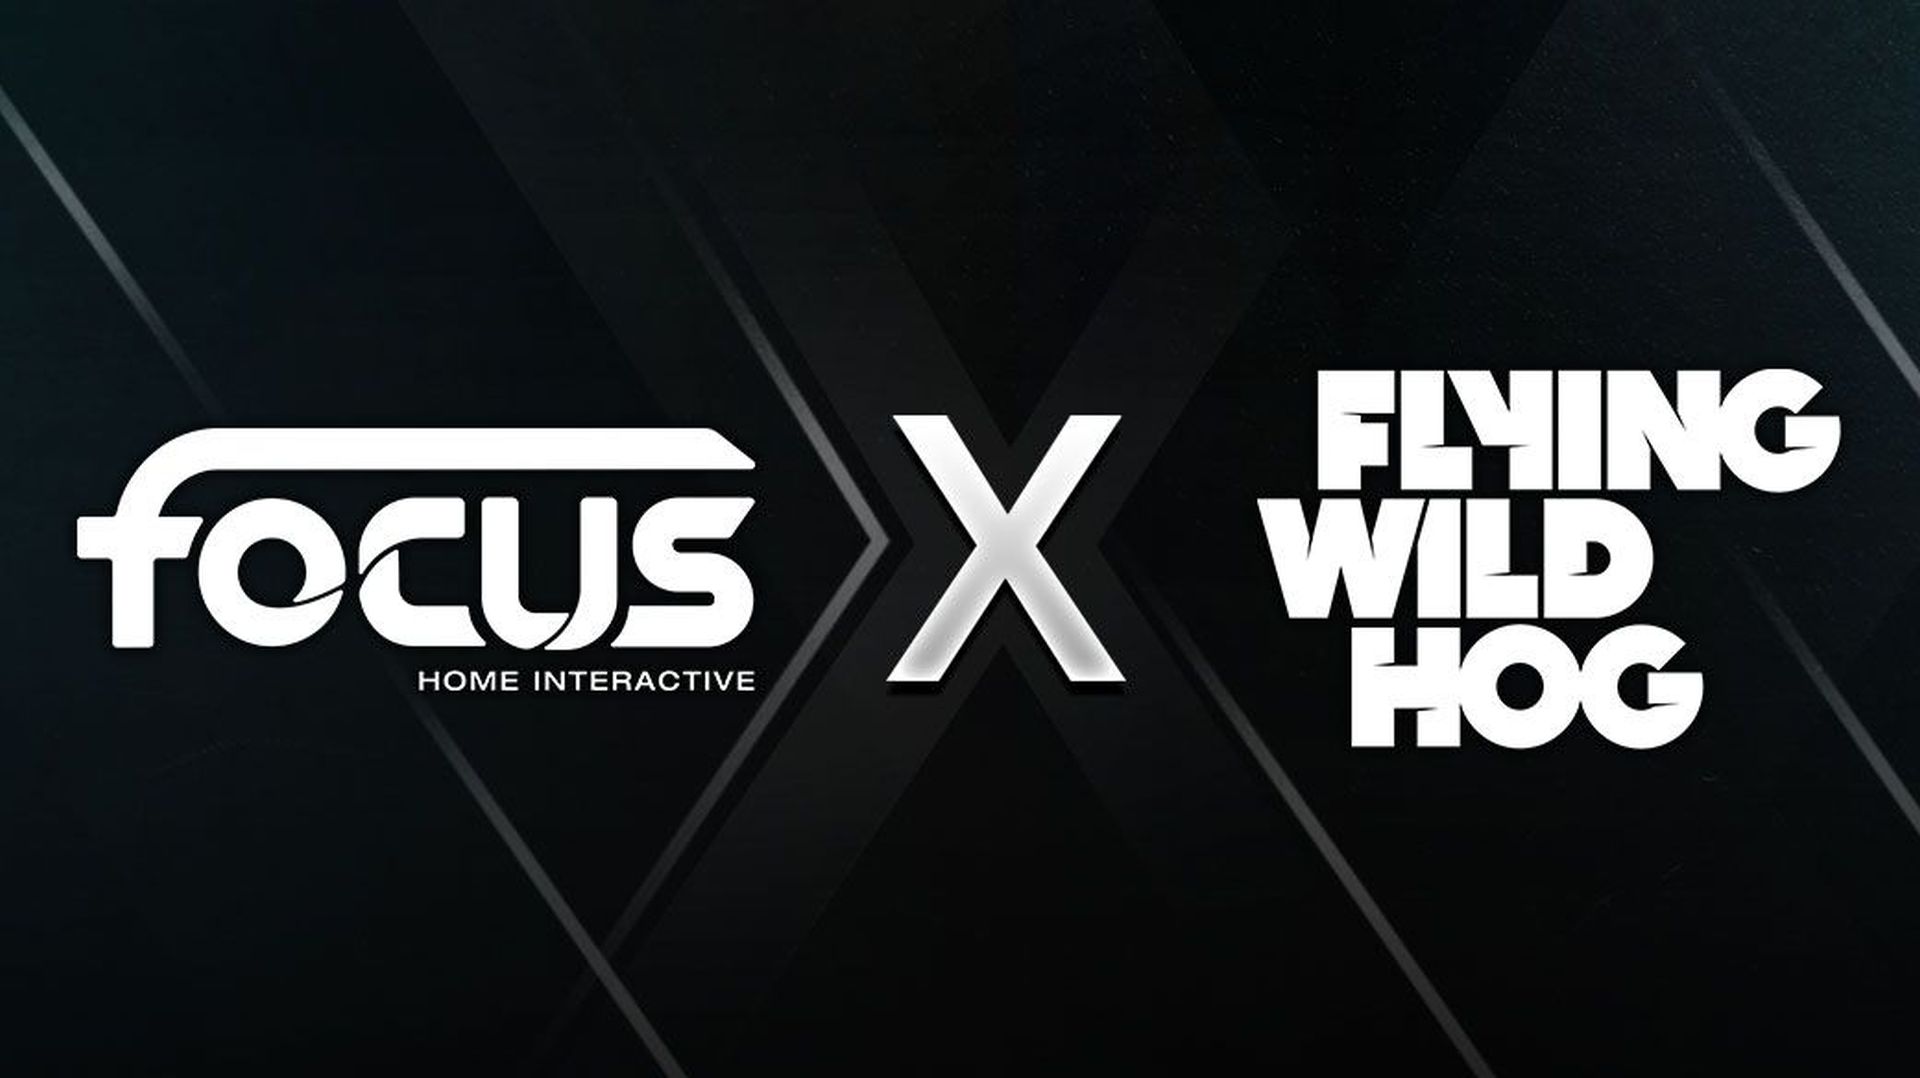 Focus Home Interactive X Volare Wild Hog